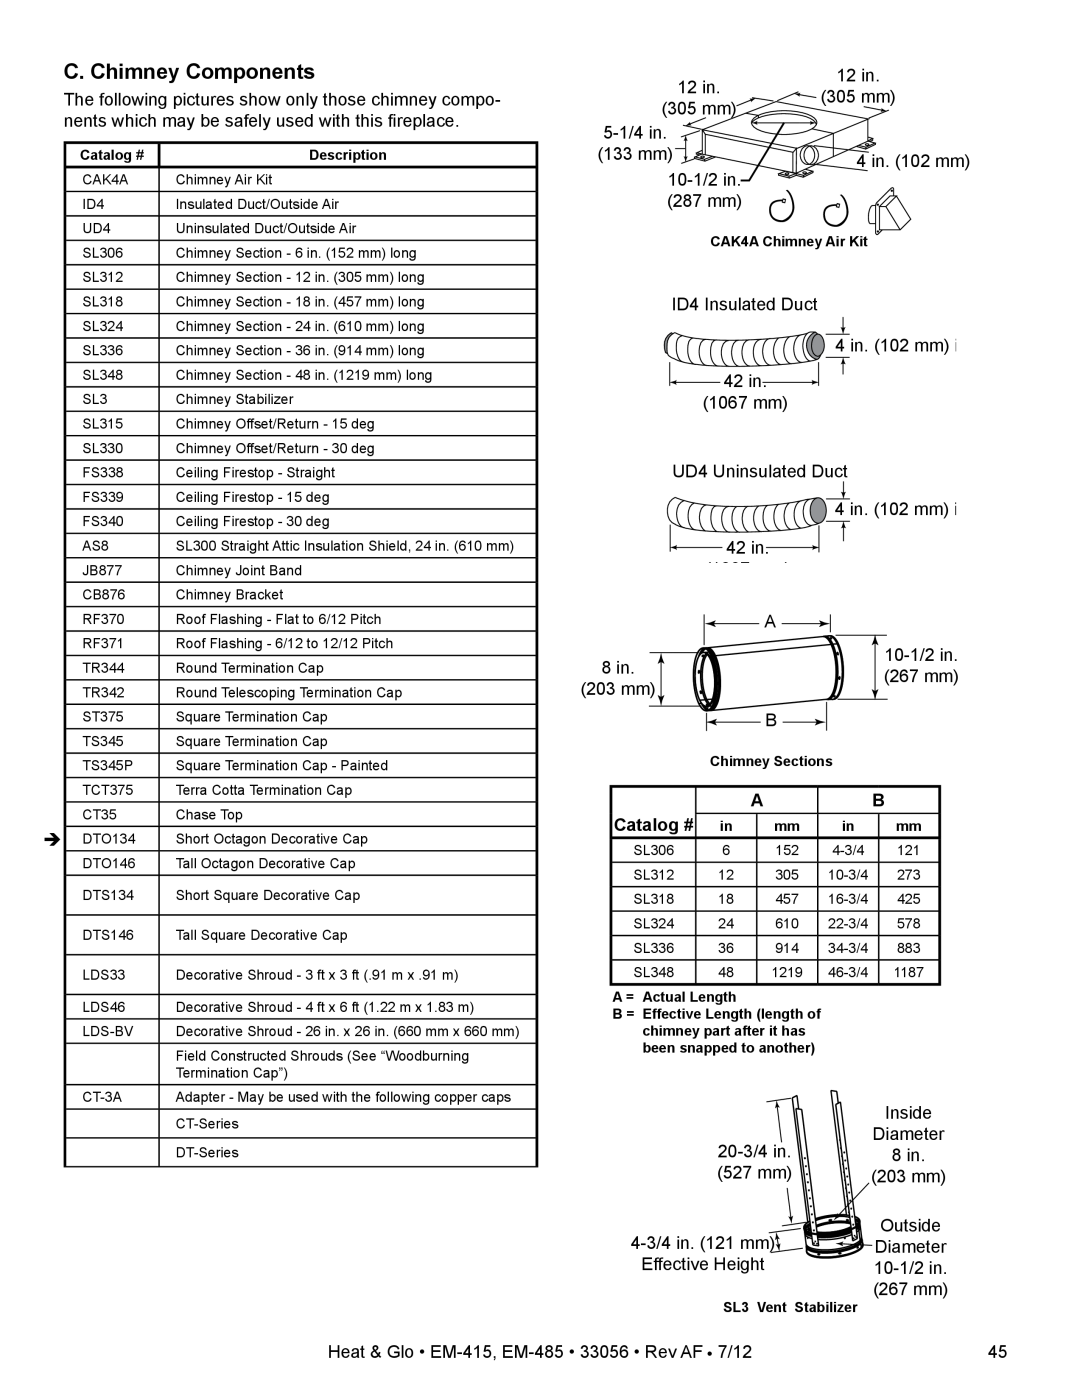 Heat & Glo LifeStyle EM-485T - 42, EM-415 - 36 owner manual C. Chimney Components, Catalog # 